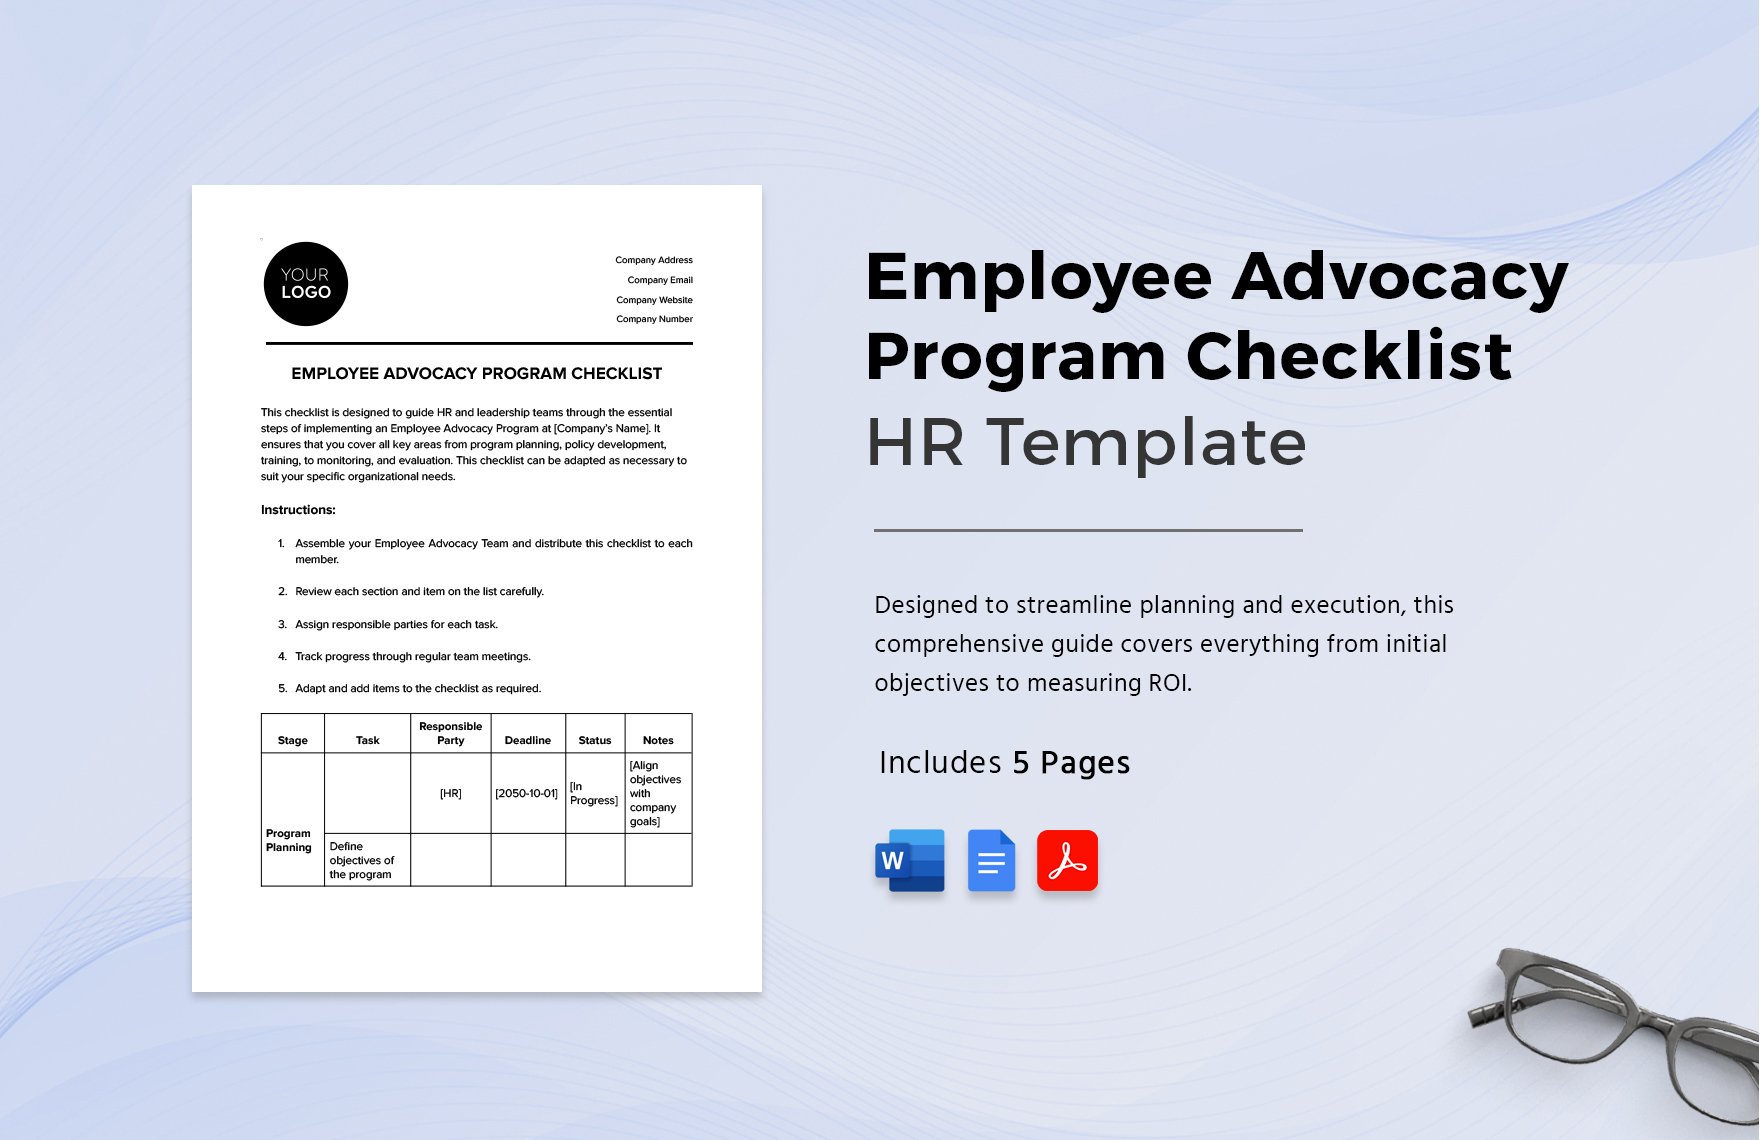 Employee Advocacy Program Checklist HR Template